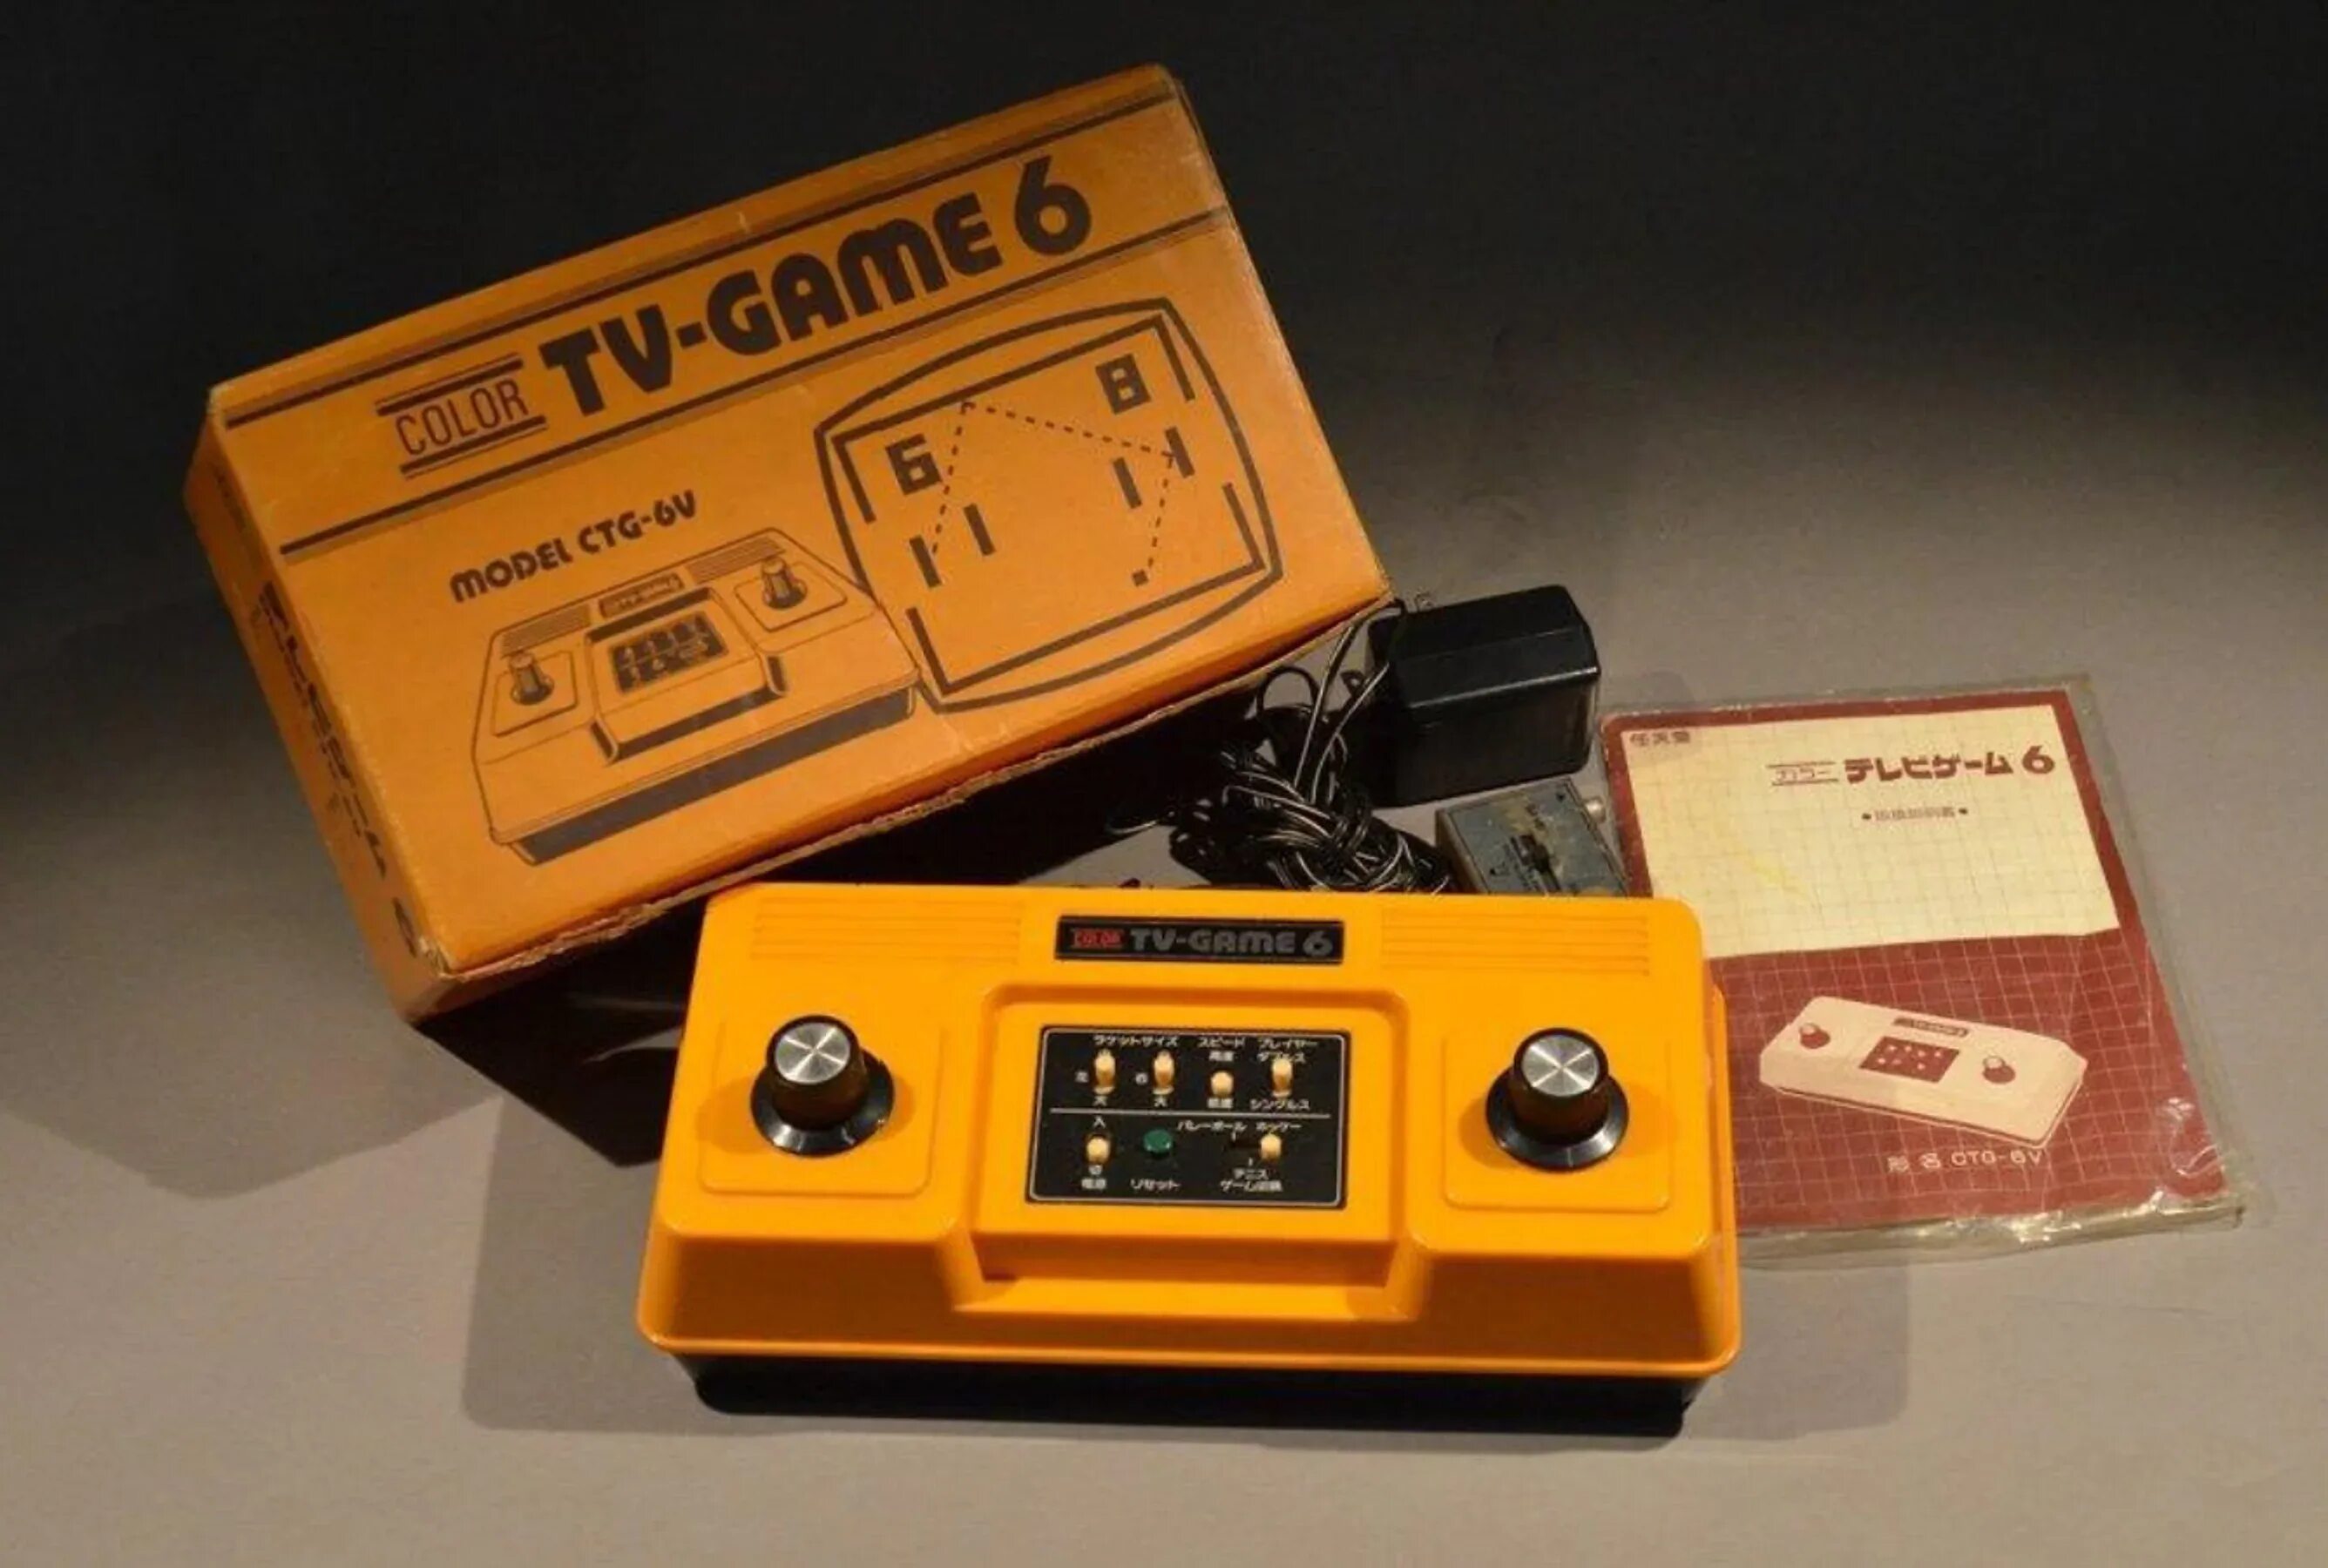 Нинтендо Color TV game игры. TV-game 6 Nintendo. Nintendo TV Computer 1977. Color TV game 6. Nintendo color